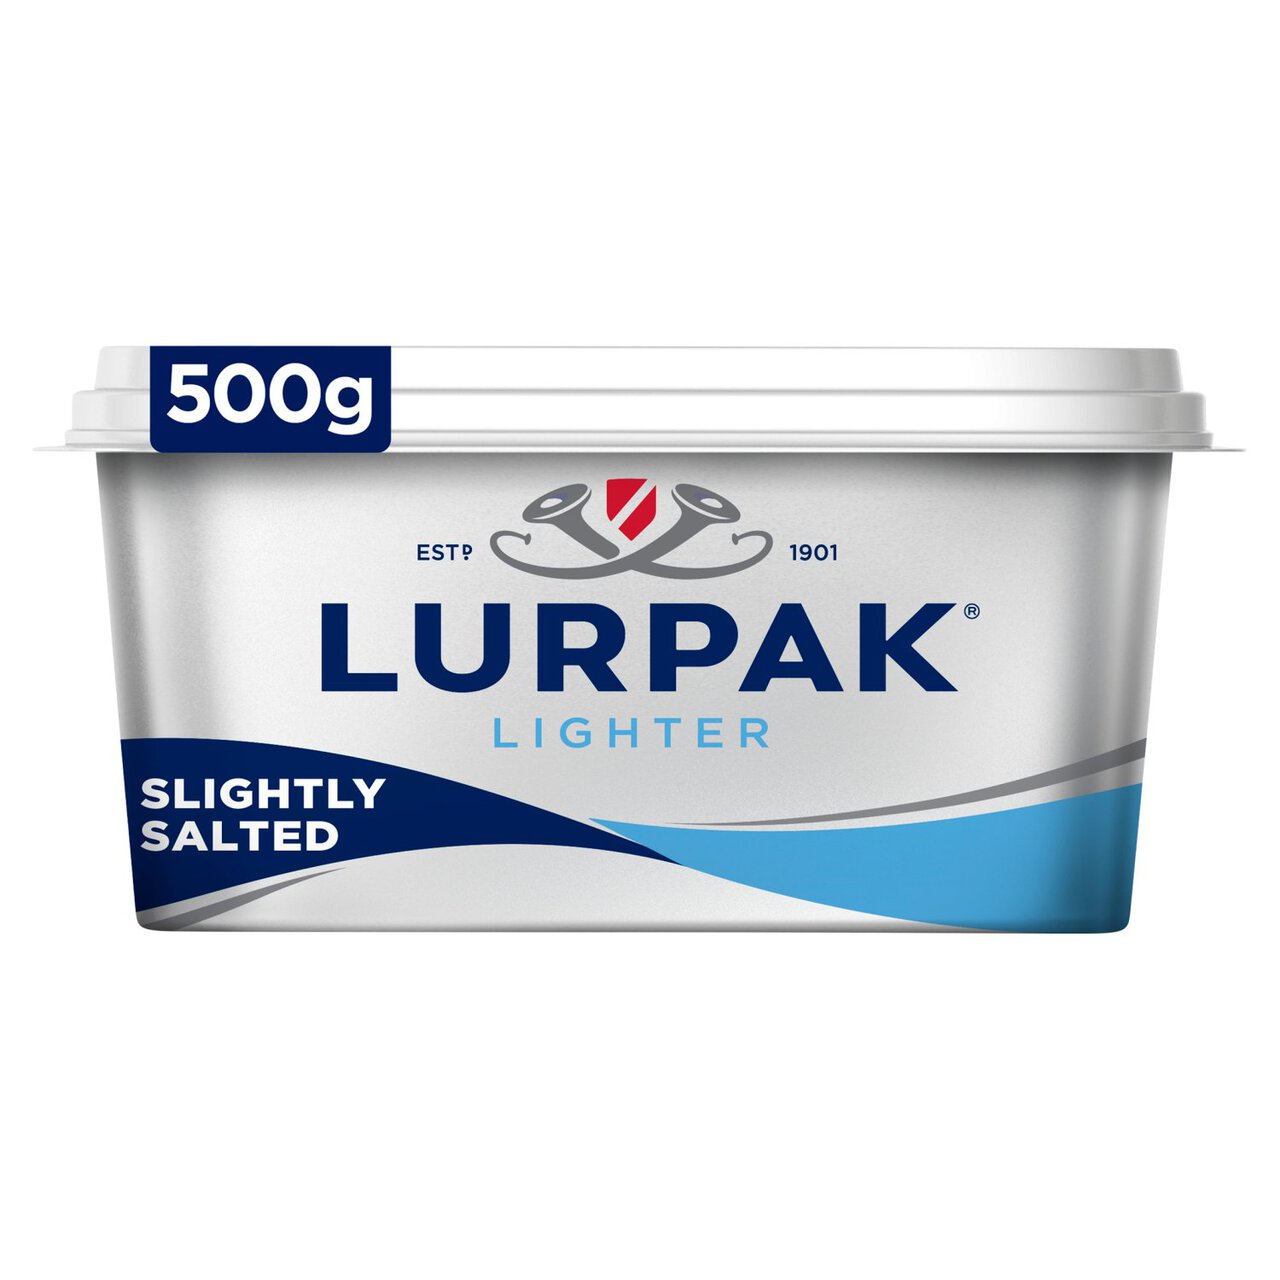 Lurpak Lighter Spreadable Blend of Butter and Rapeseed Oil 500g